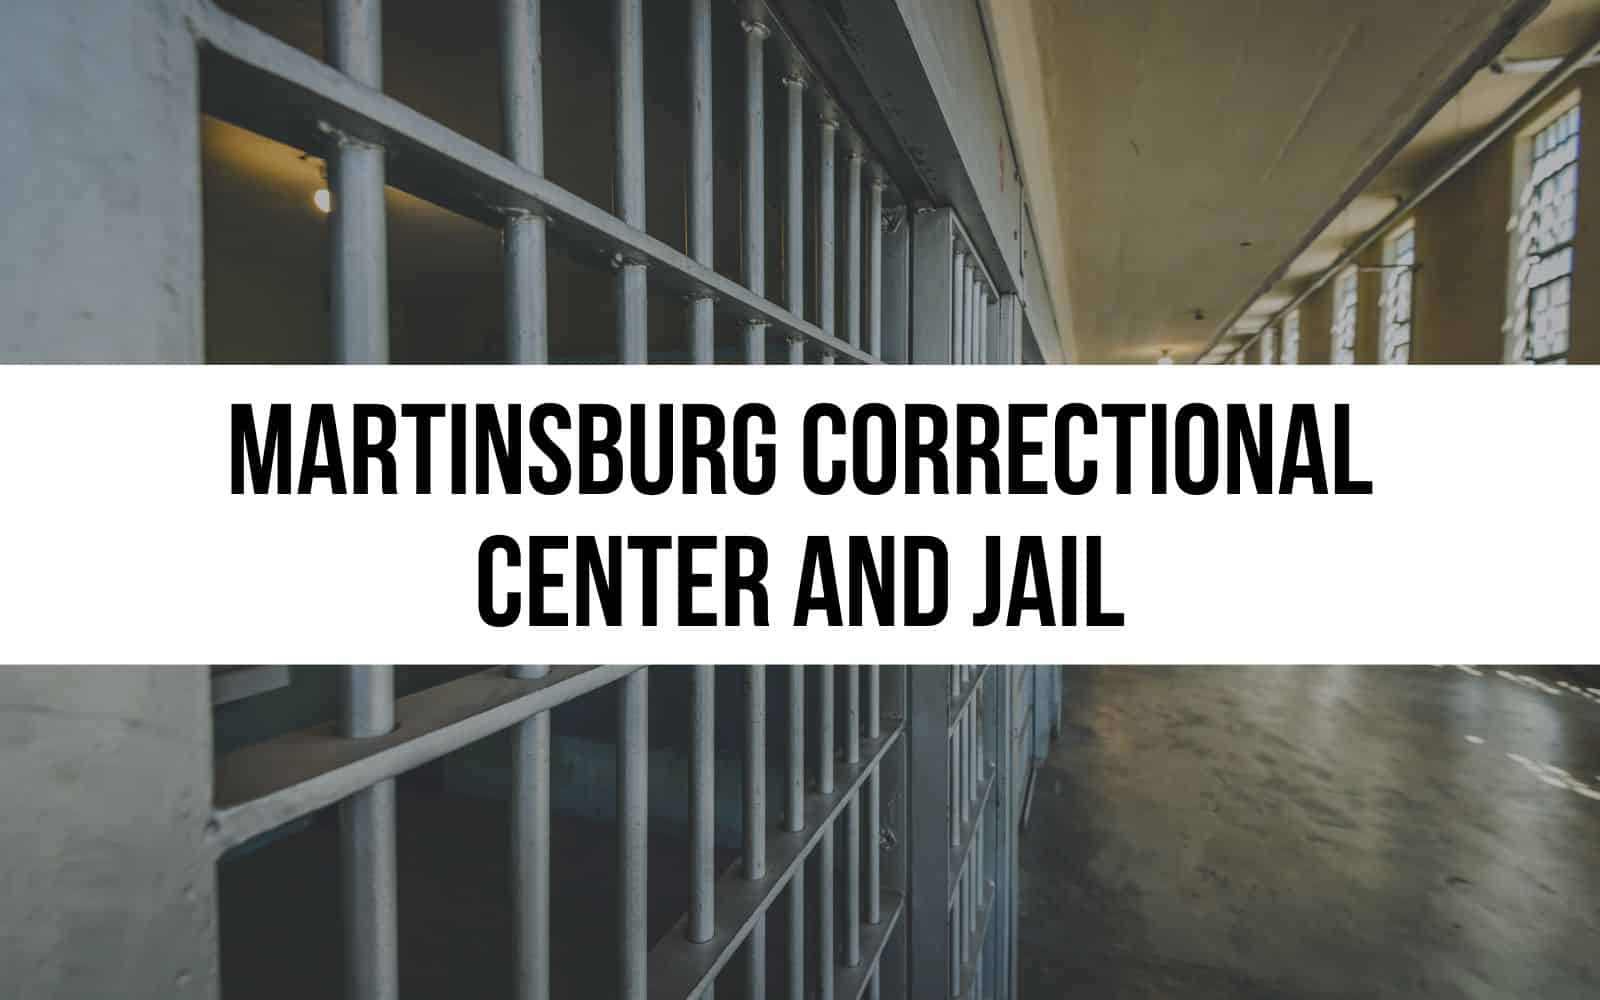 Martinsburg Correctional Center and Jail